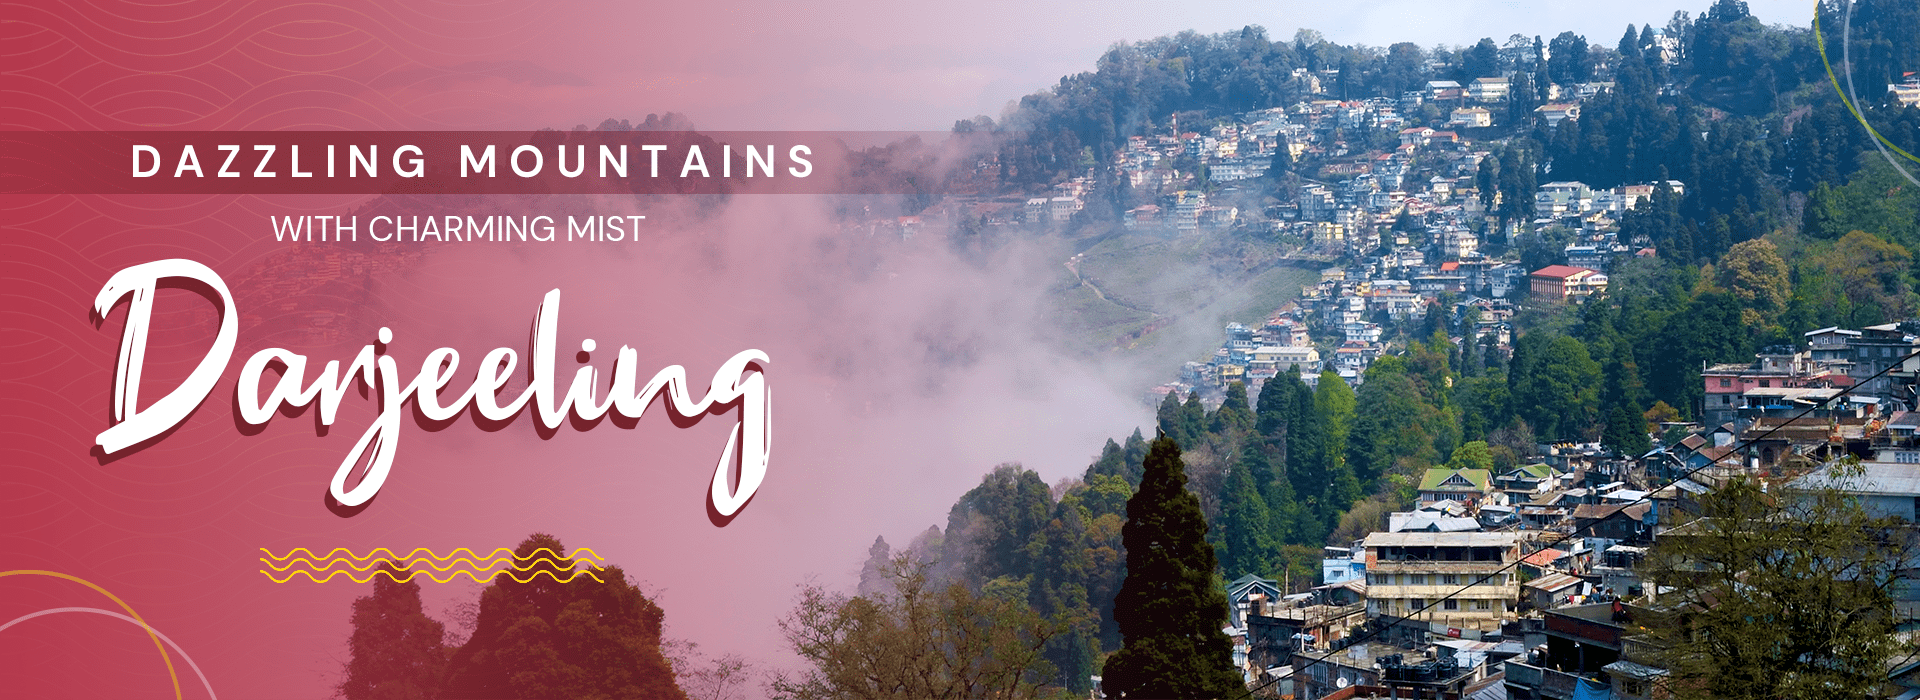 Book Darjeeling Tour with Jayanti Travels Siliguri